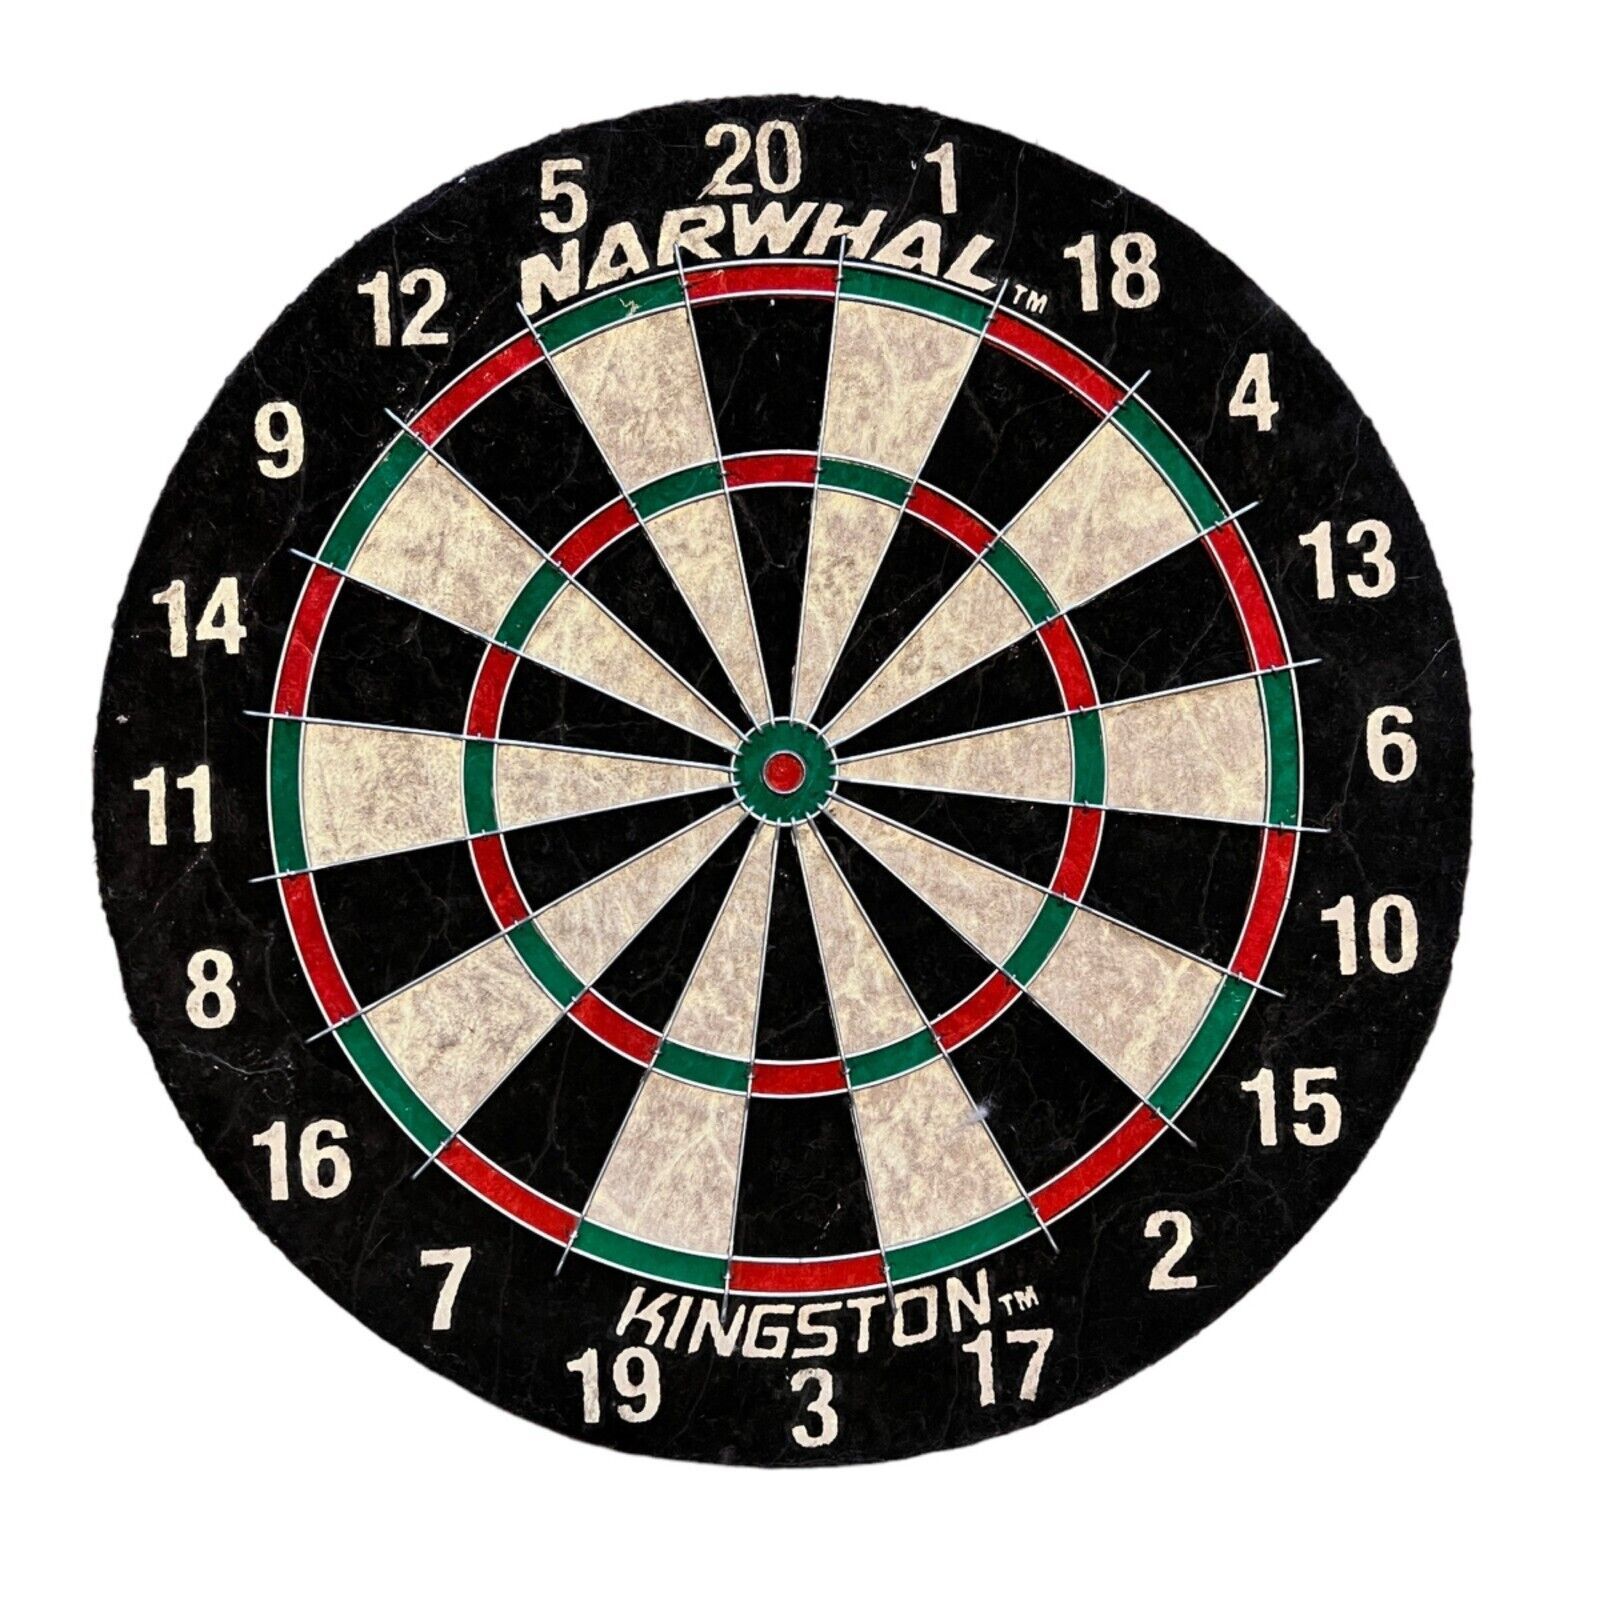 Narwhal Kingston Dartboard Eastpoint Sports 2018 No Darts - $20.79